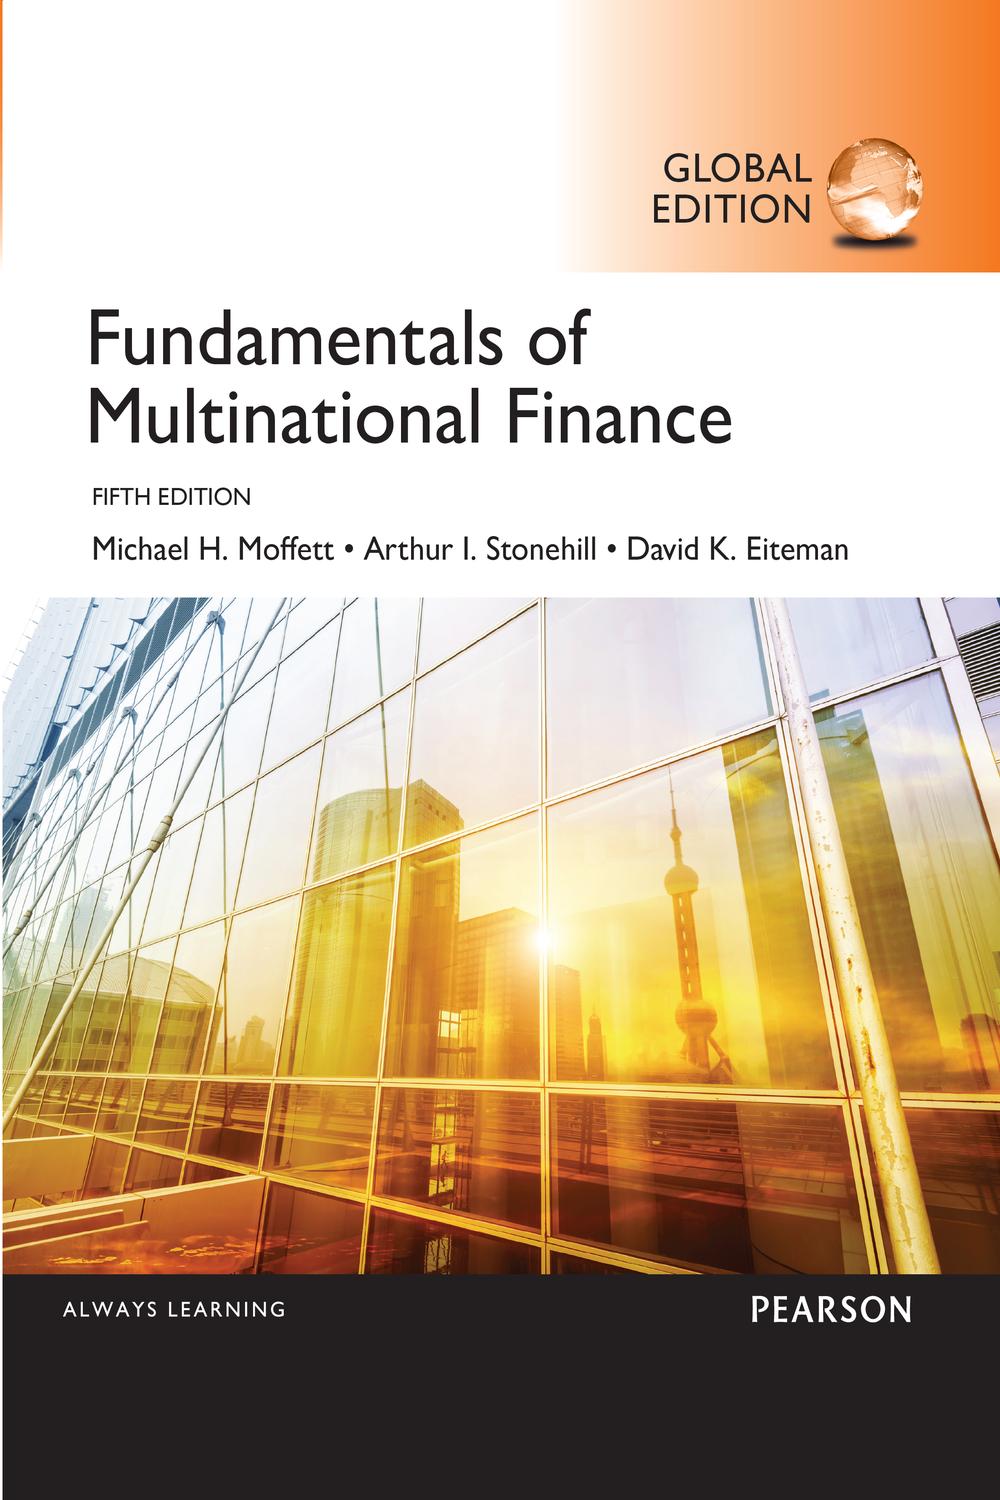 Fundamentals of multinational finance pdf free download download cabana cougar club